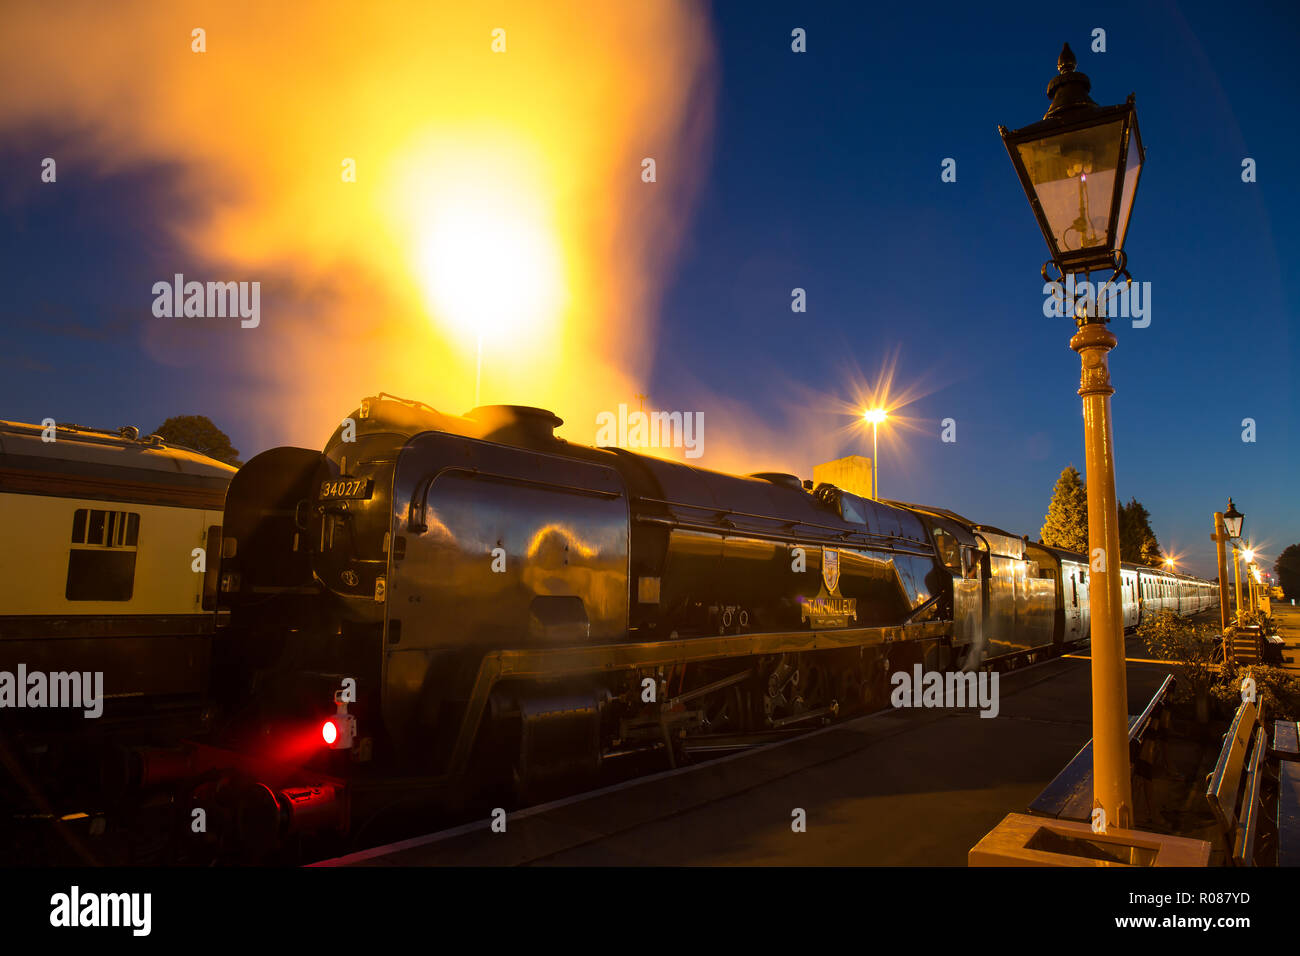 Long exposure, night shot of UK steam locomotive, back-lit, alongside platform, in the dark. Dramatic effect as engine releases steam under pressure. Stock Photo